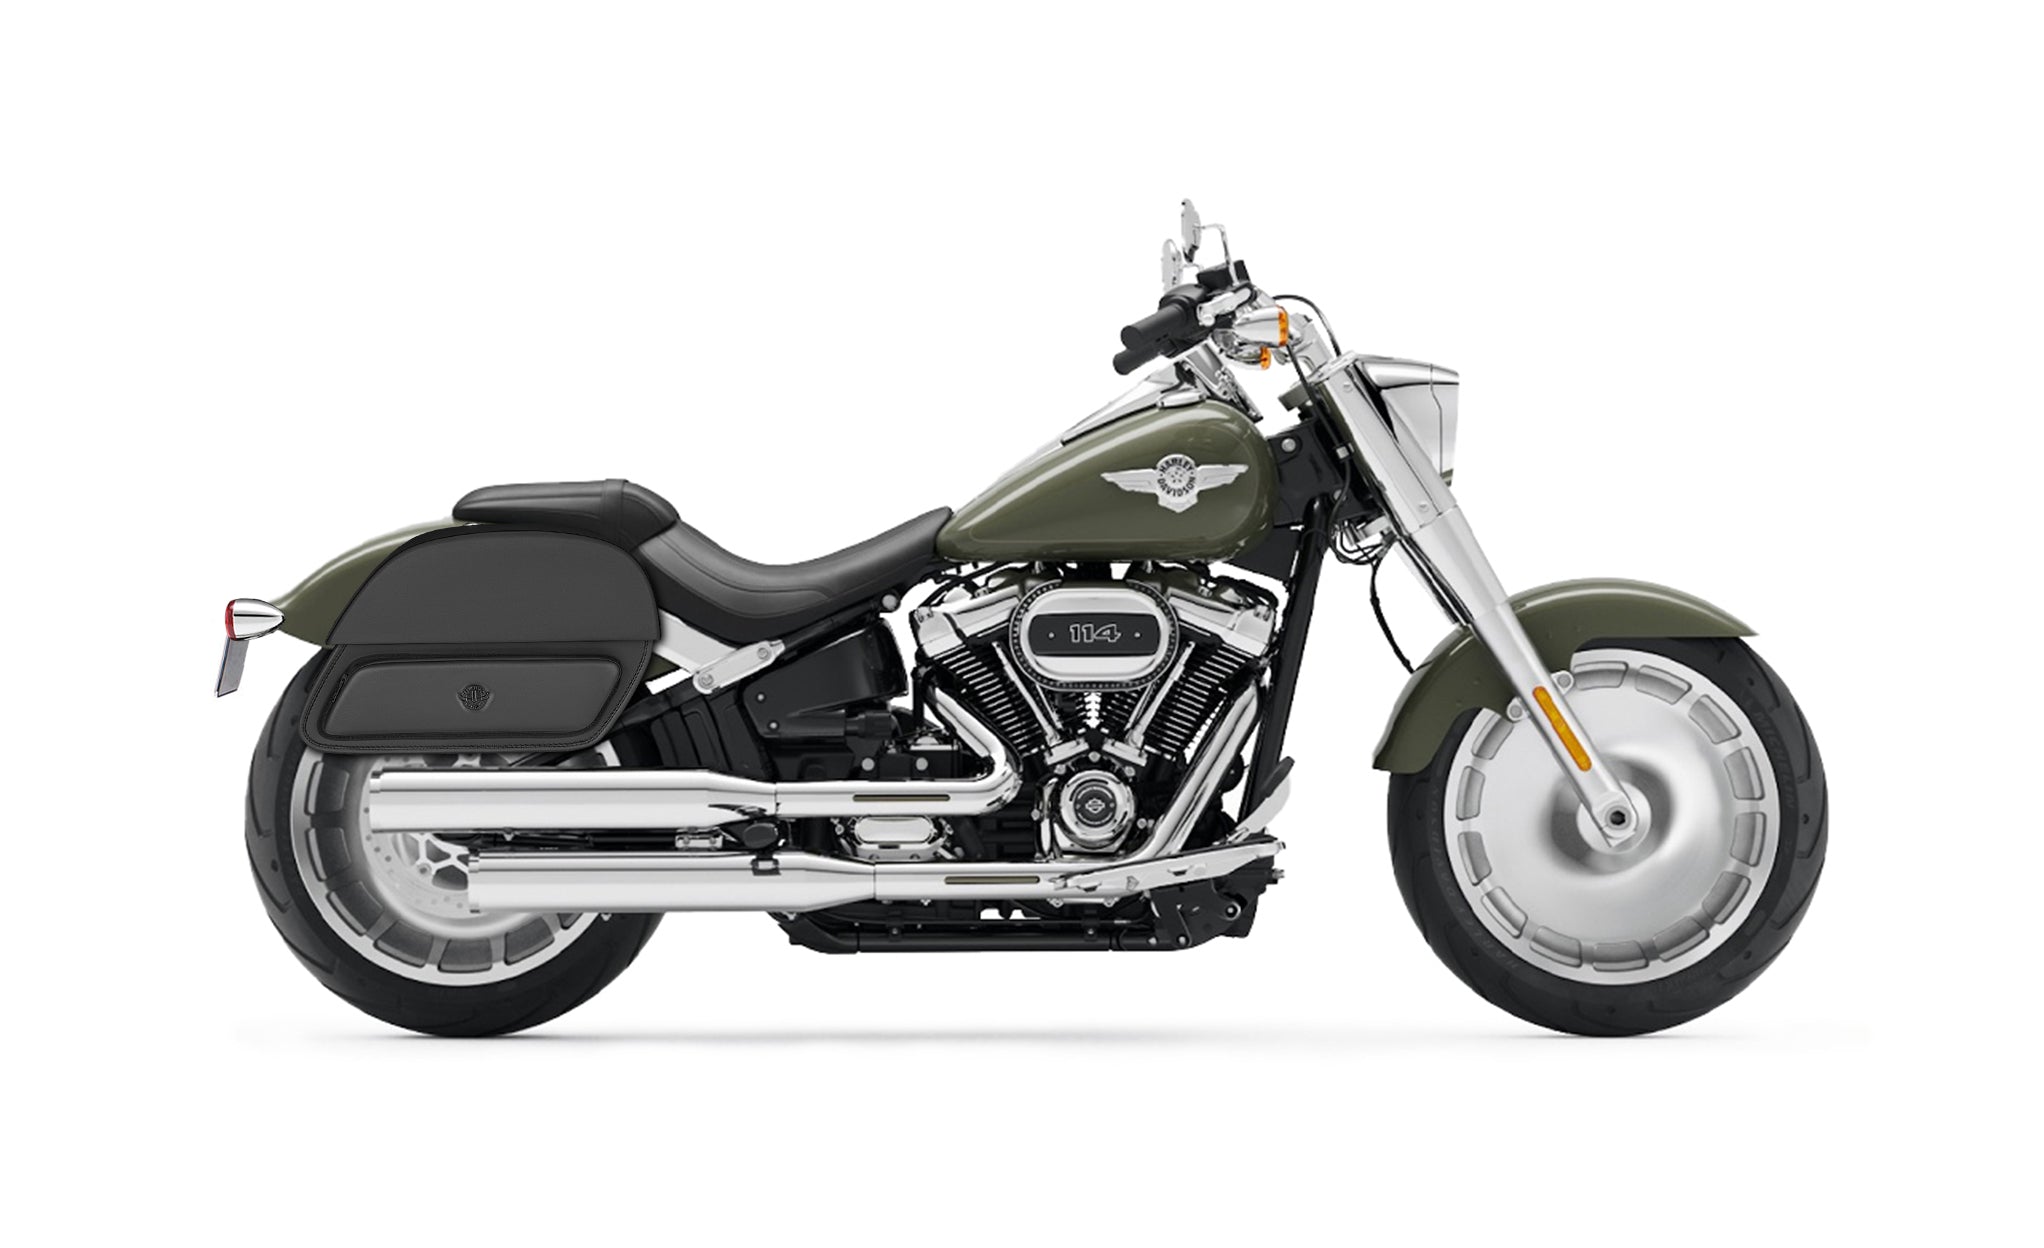 28L - Pantheon Medium Motorcycle Saddlebags for Harley Softail Fatboy FLSTF/I on Bike Photo @expand